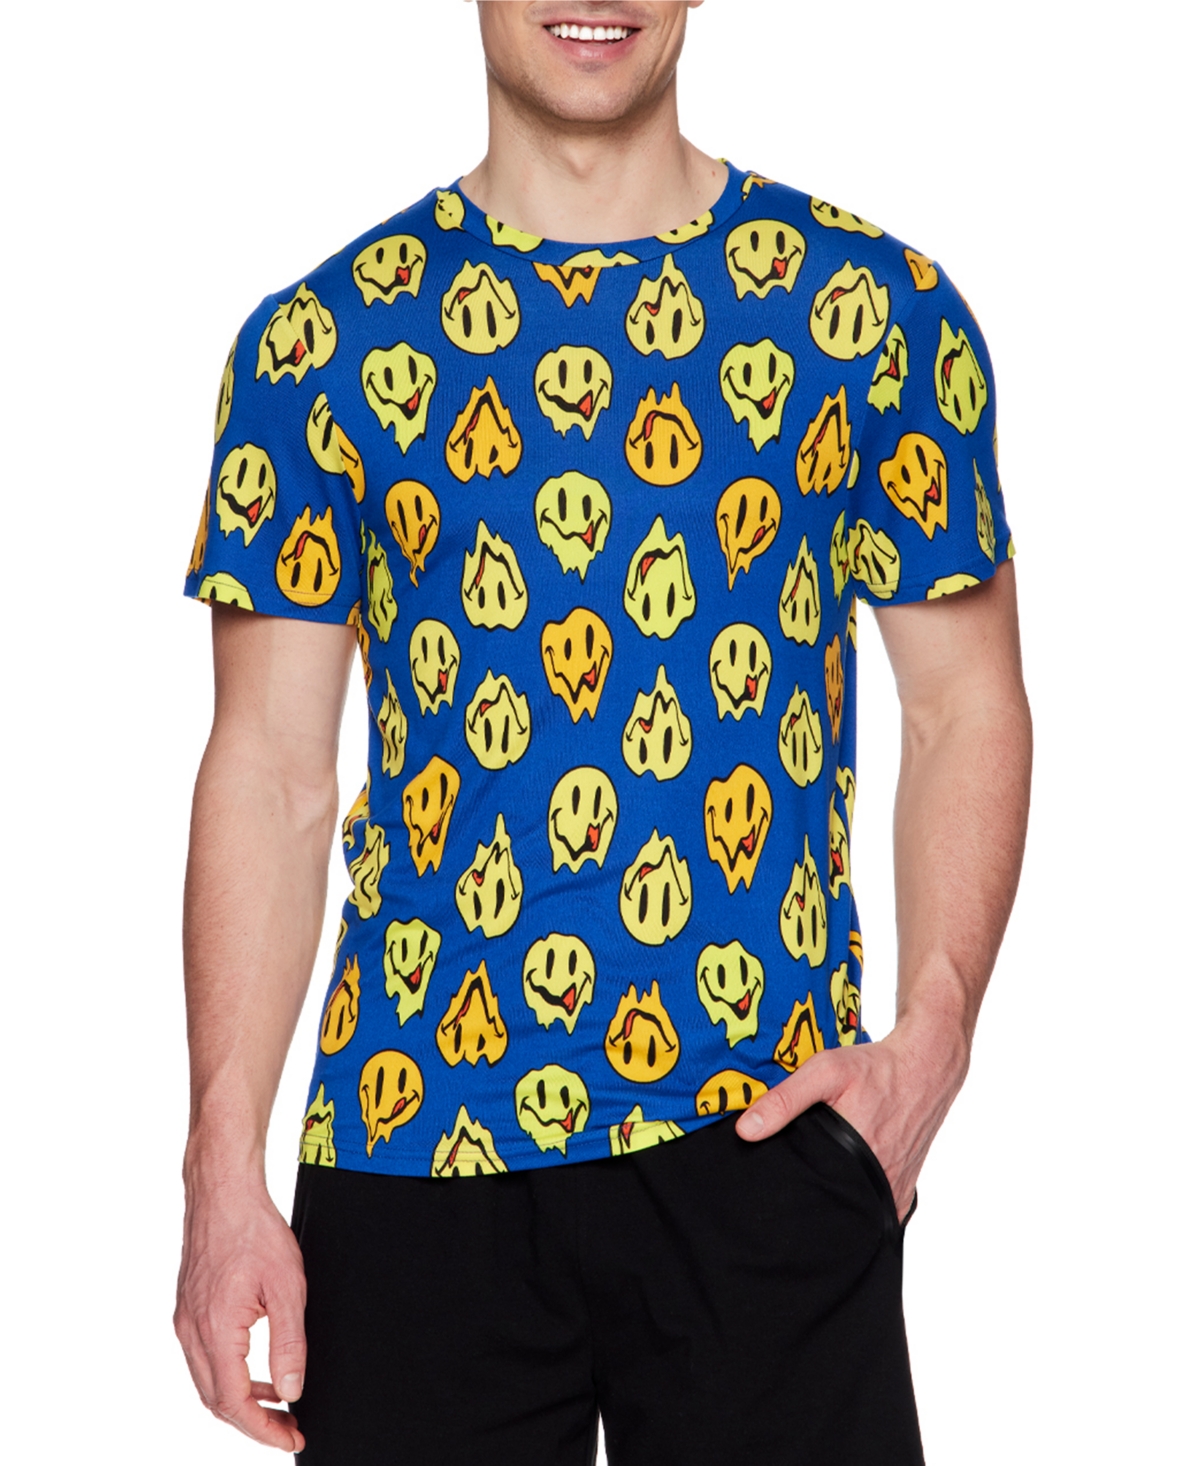 Men's Fun Melting Lickies Graphic T-Shirt - Classic Blue